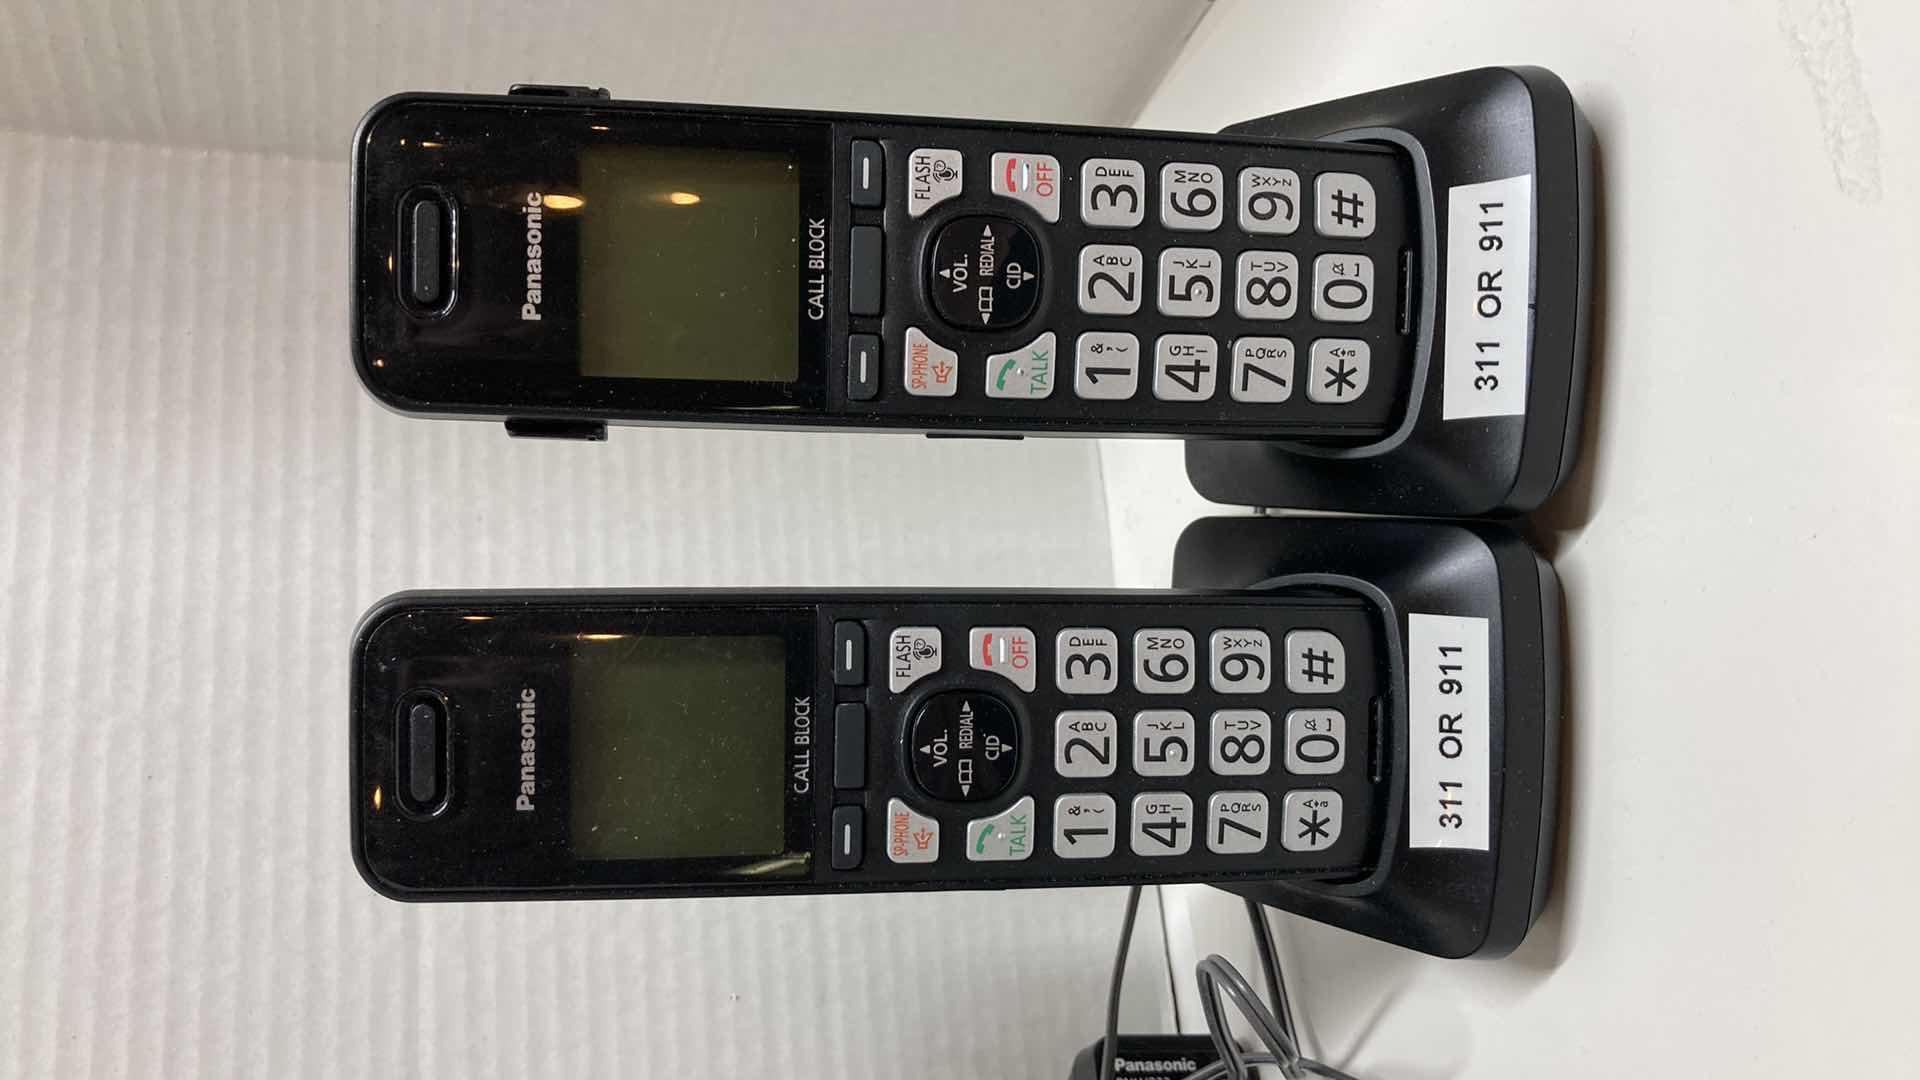 Photo 3 of PANASONIC CORDLESS PHONE SYSTEM W 5 PHONES & ANSWERING MACHINE MODEL